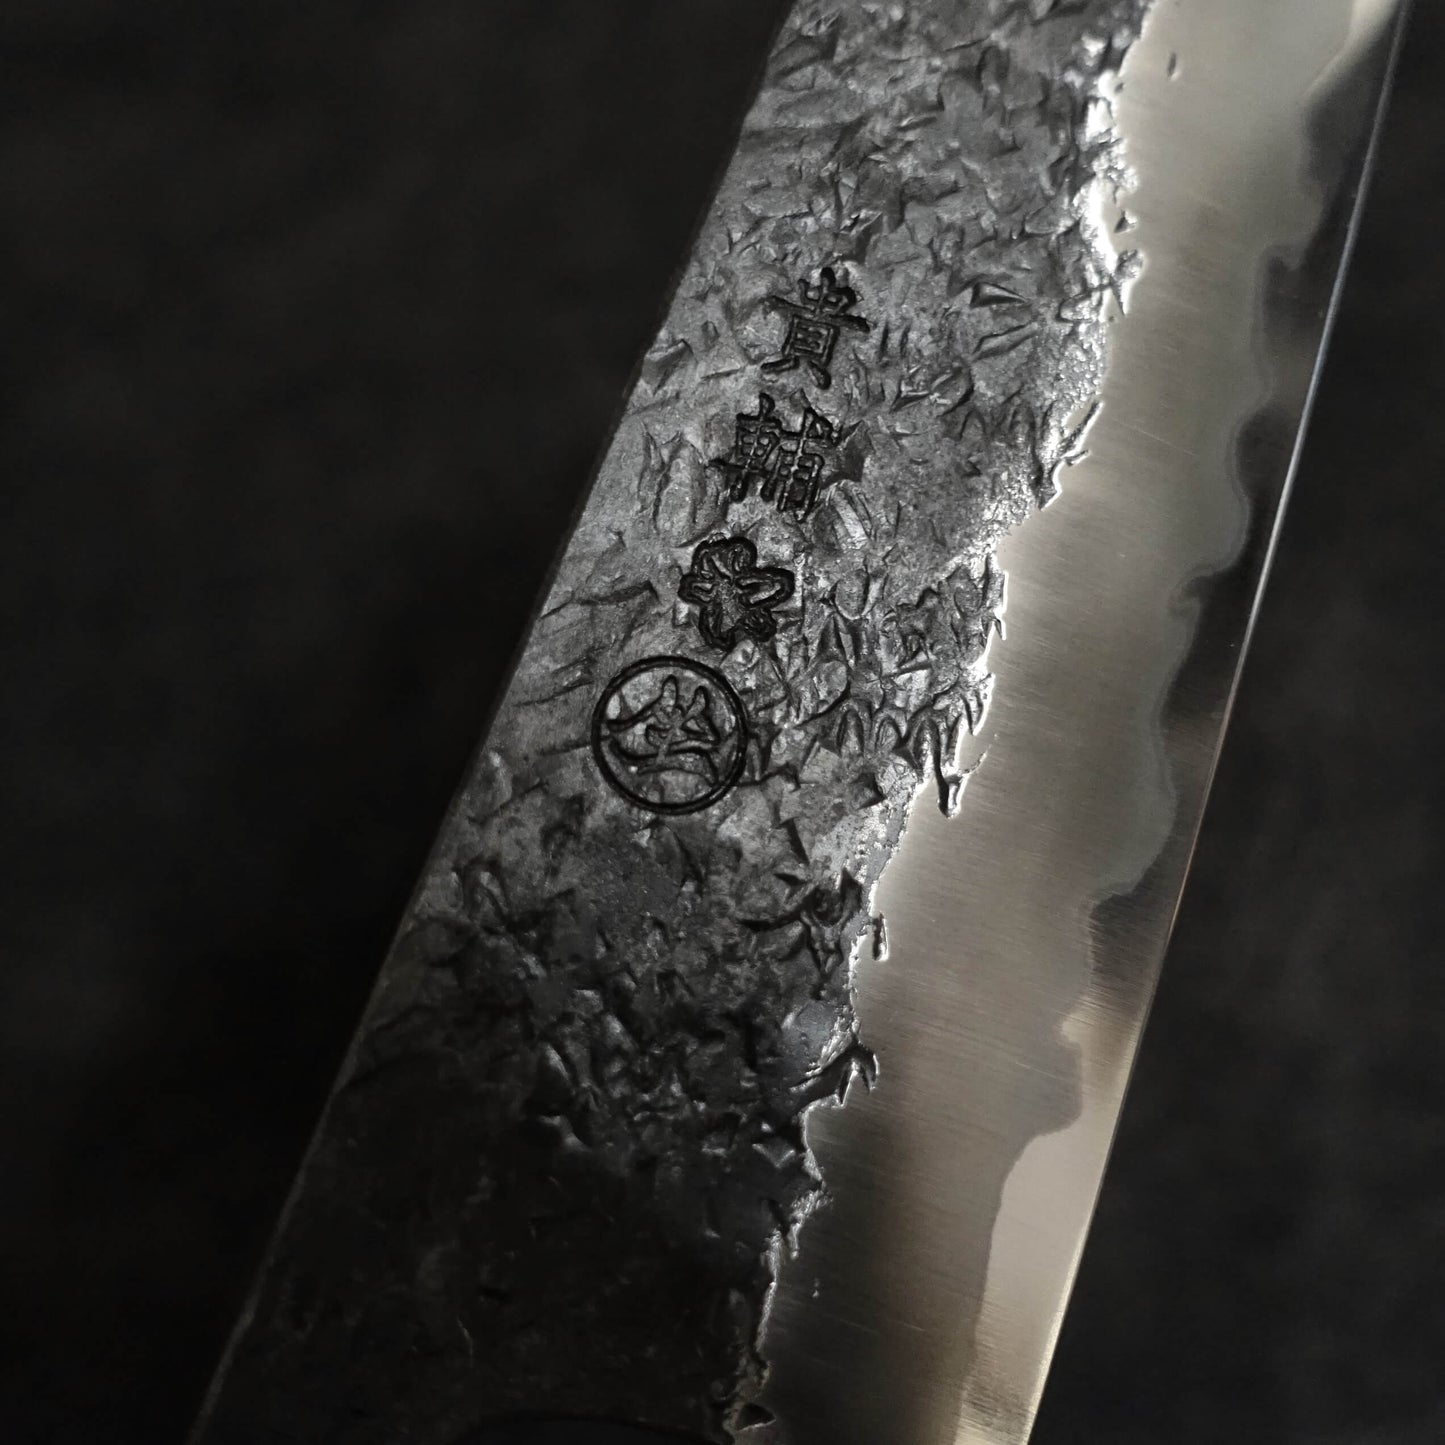 Kisuke x Zahocho tsuchime kurouchi aogami #2 180mm bunka (2020) - Zahocho Japanese Knives